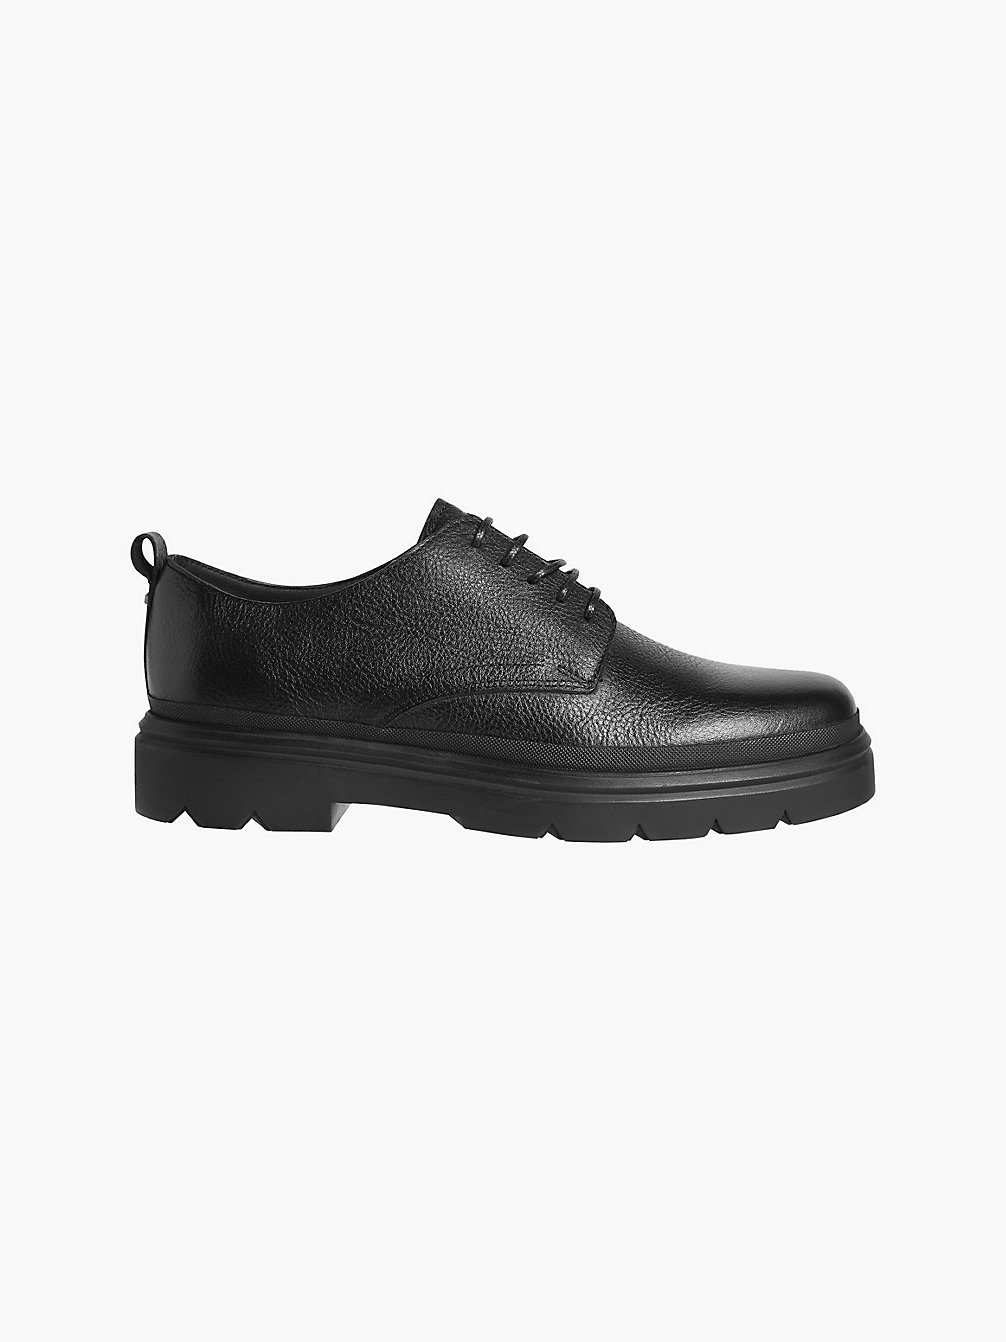 PVH BLACK Leather Lace-Up Shoes undefined men Calvin Klein